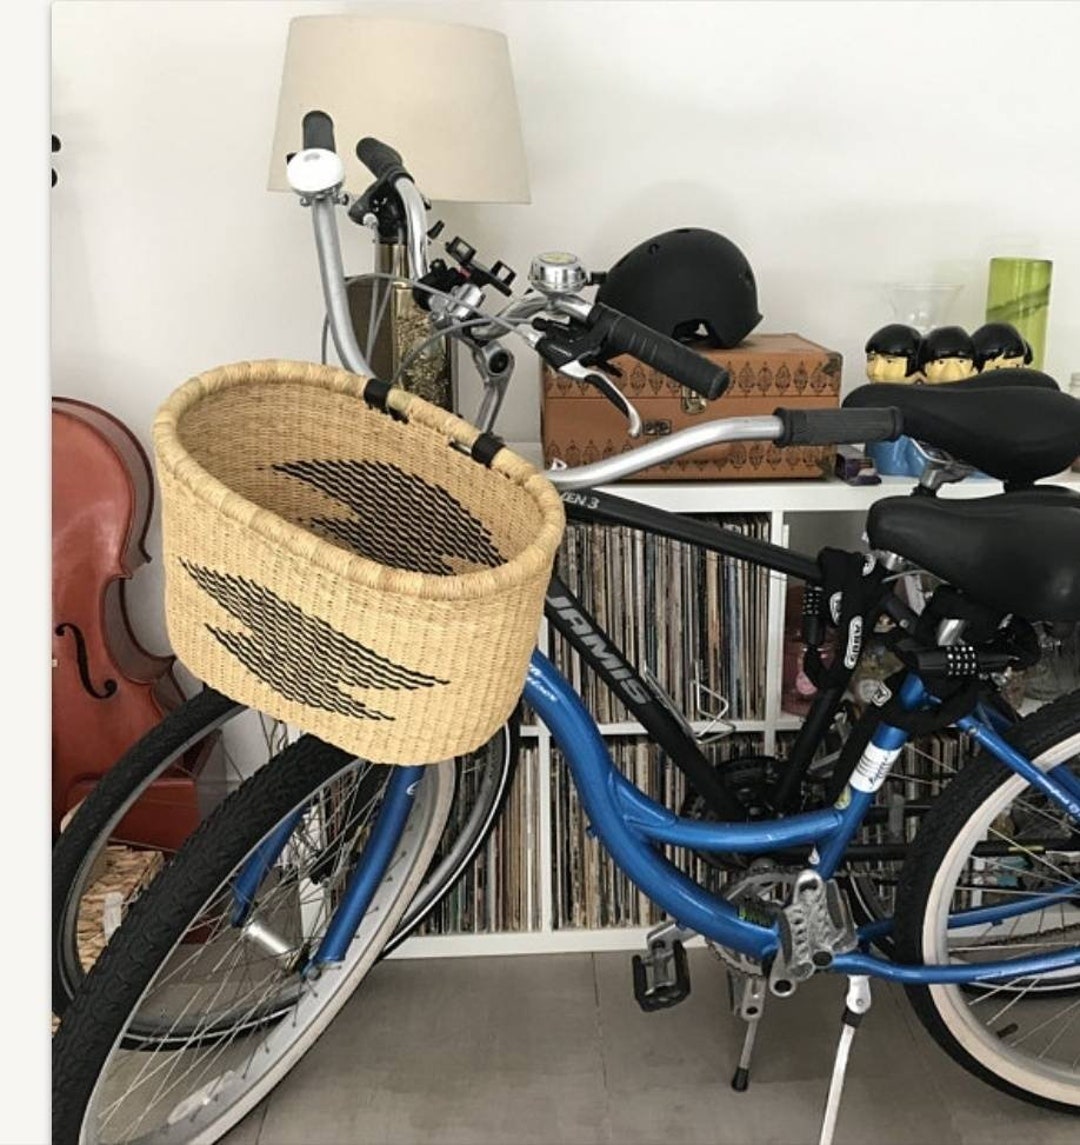 Unique Bicycle Basket,bike Basket Best Friend Gift, Bike Pannier